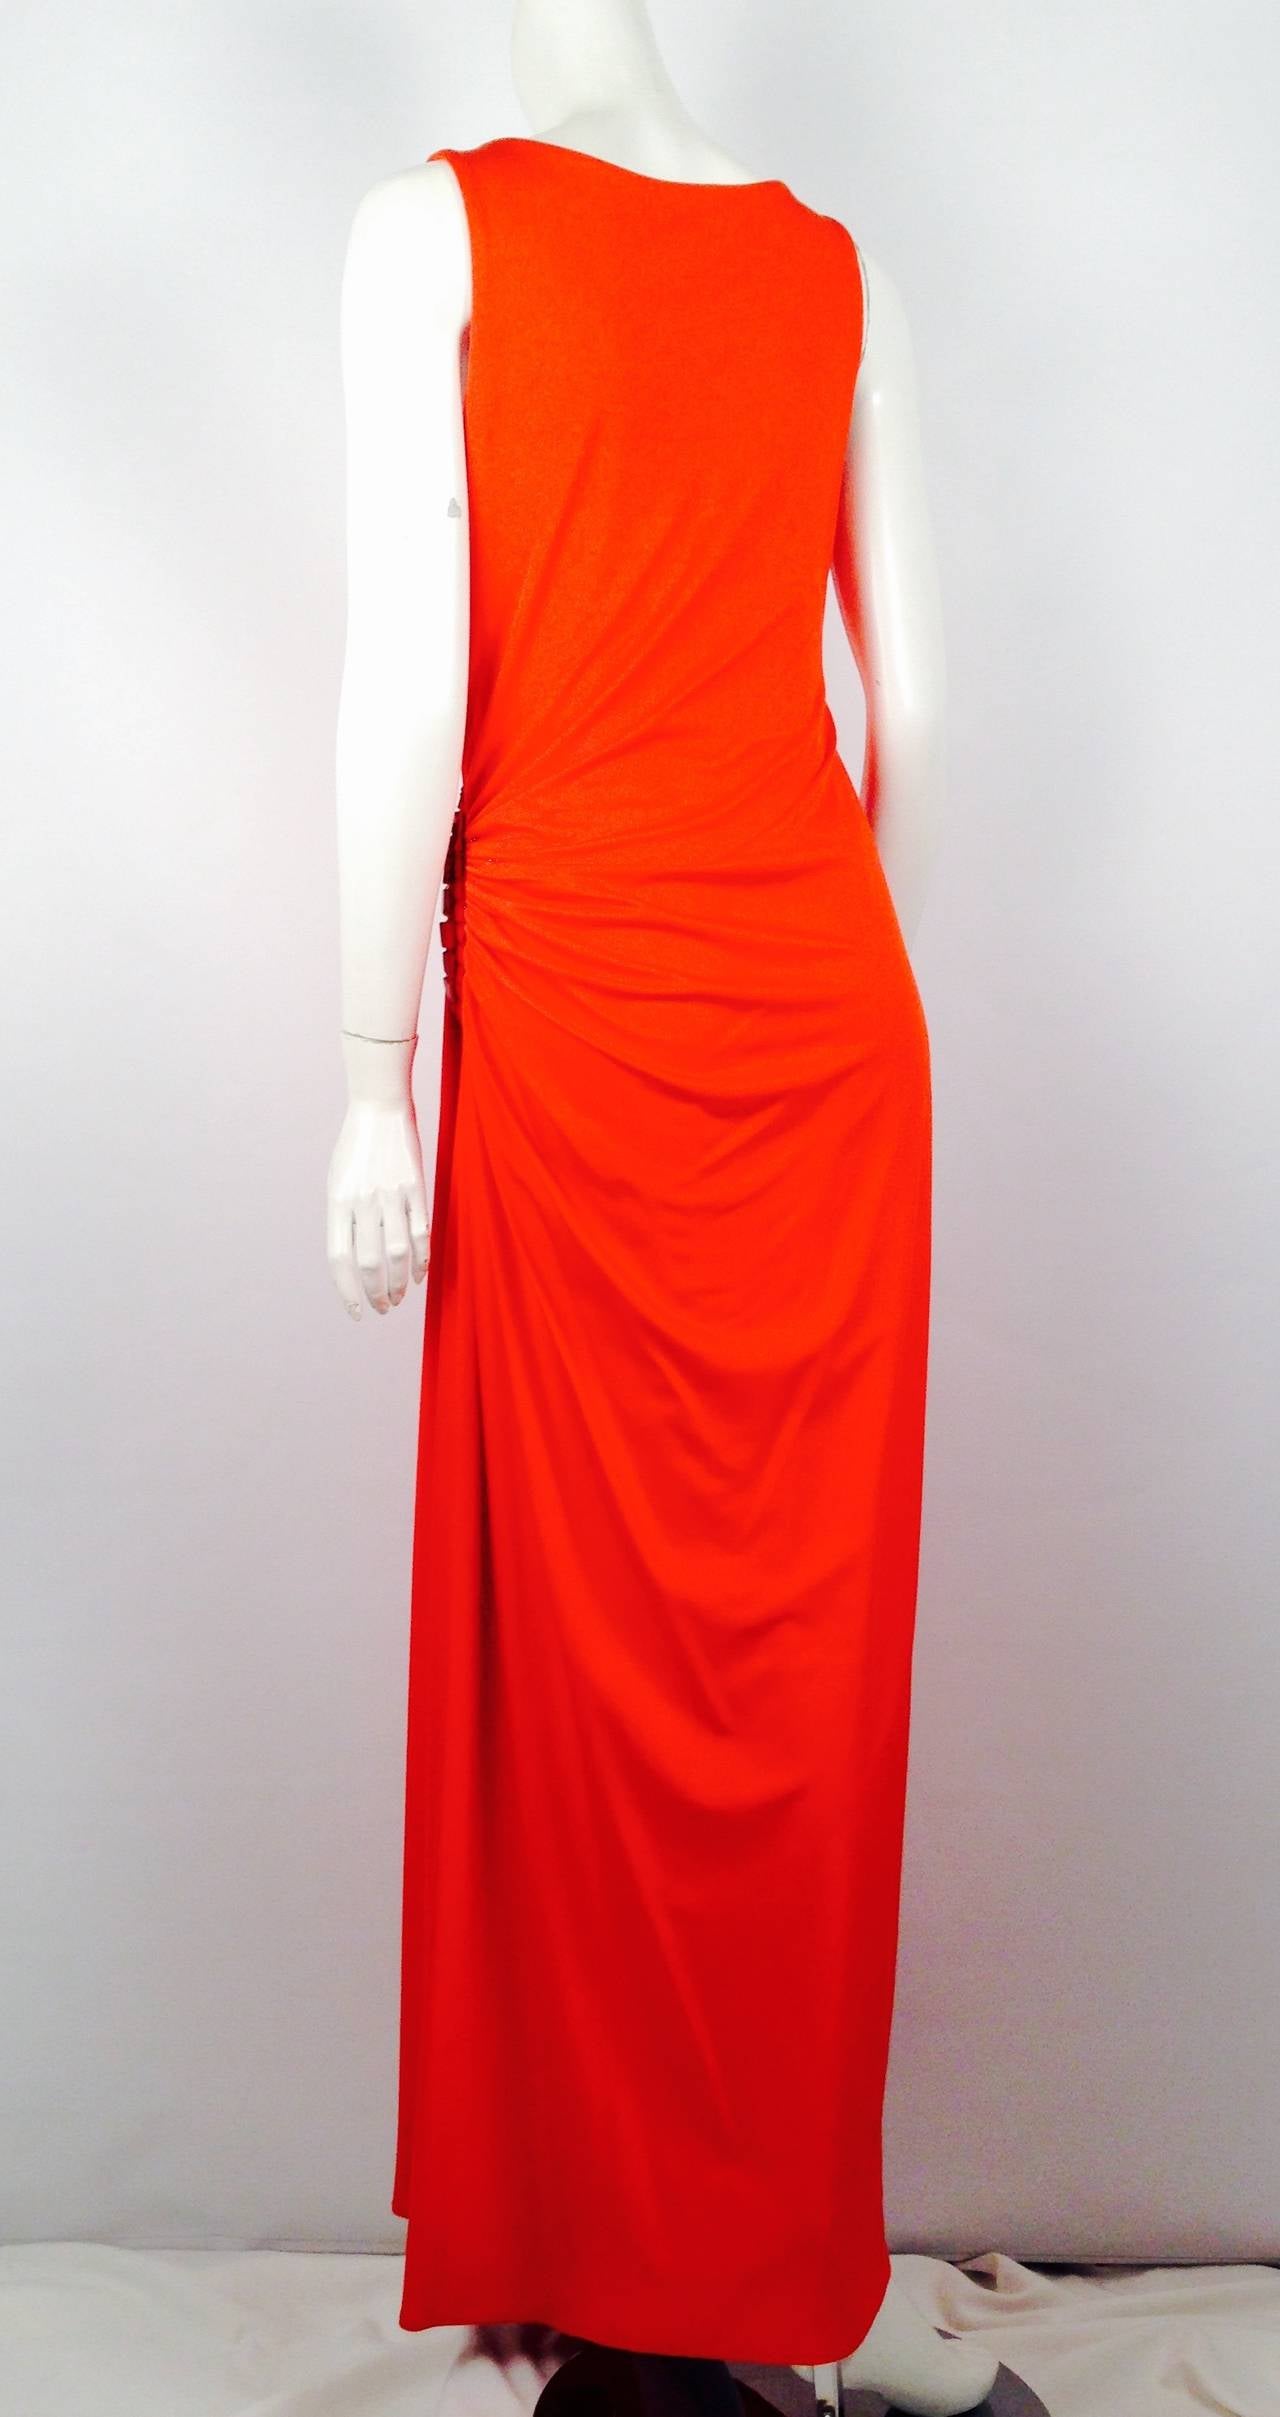 mandarin orange dress